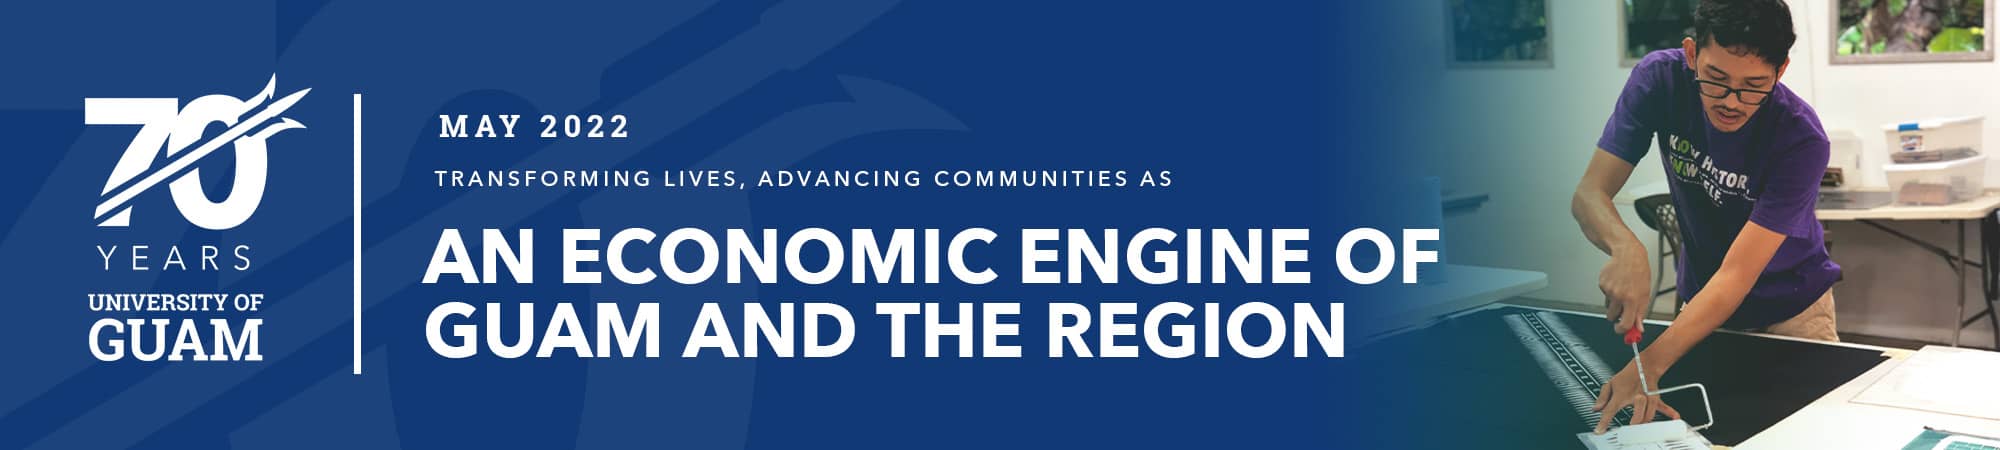 UOG: An economic engine of Guam and the region